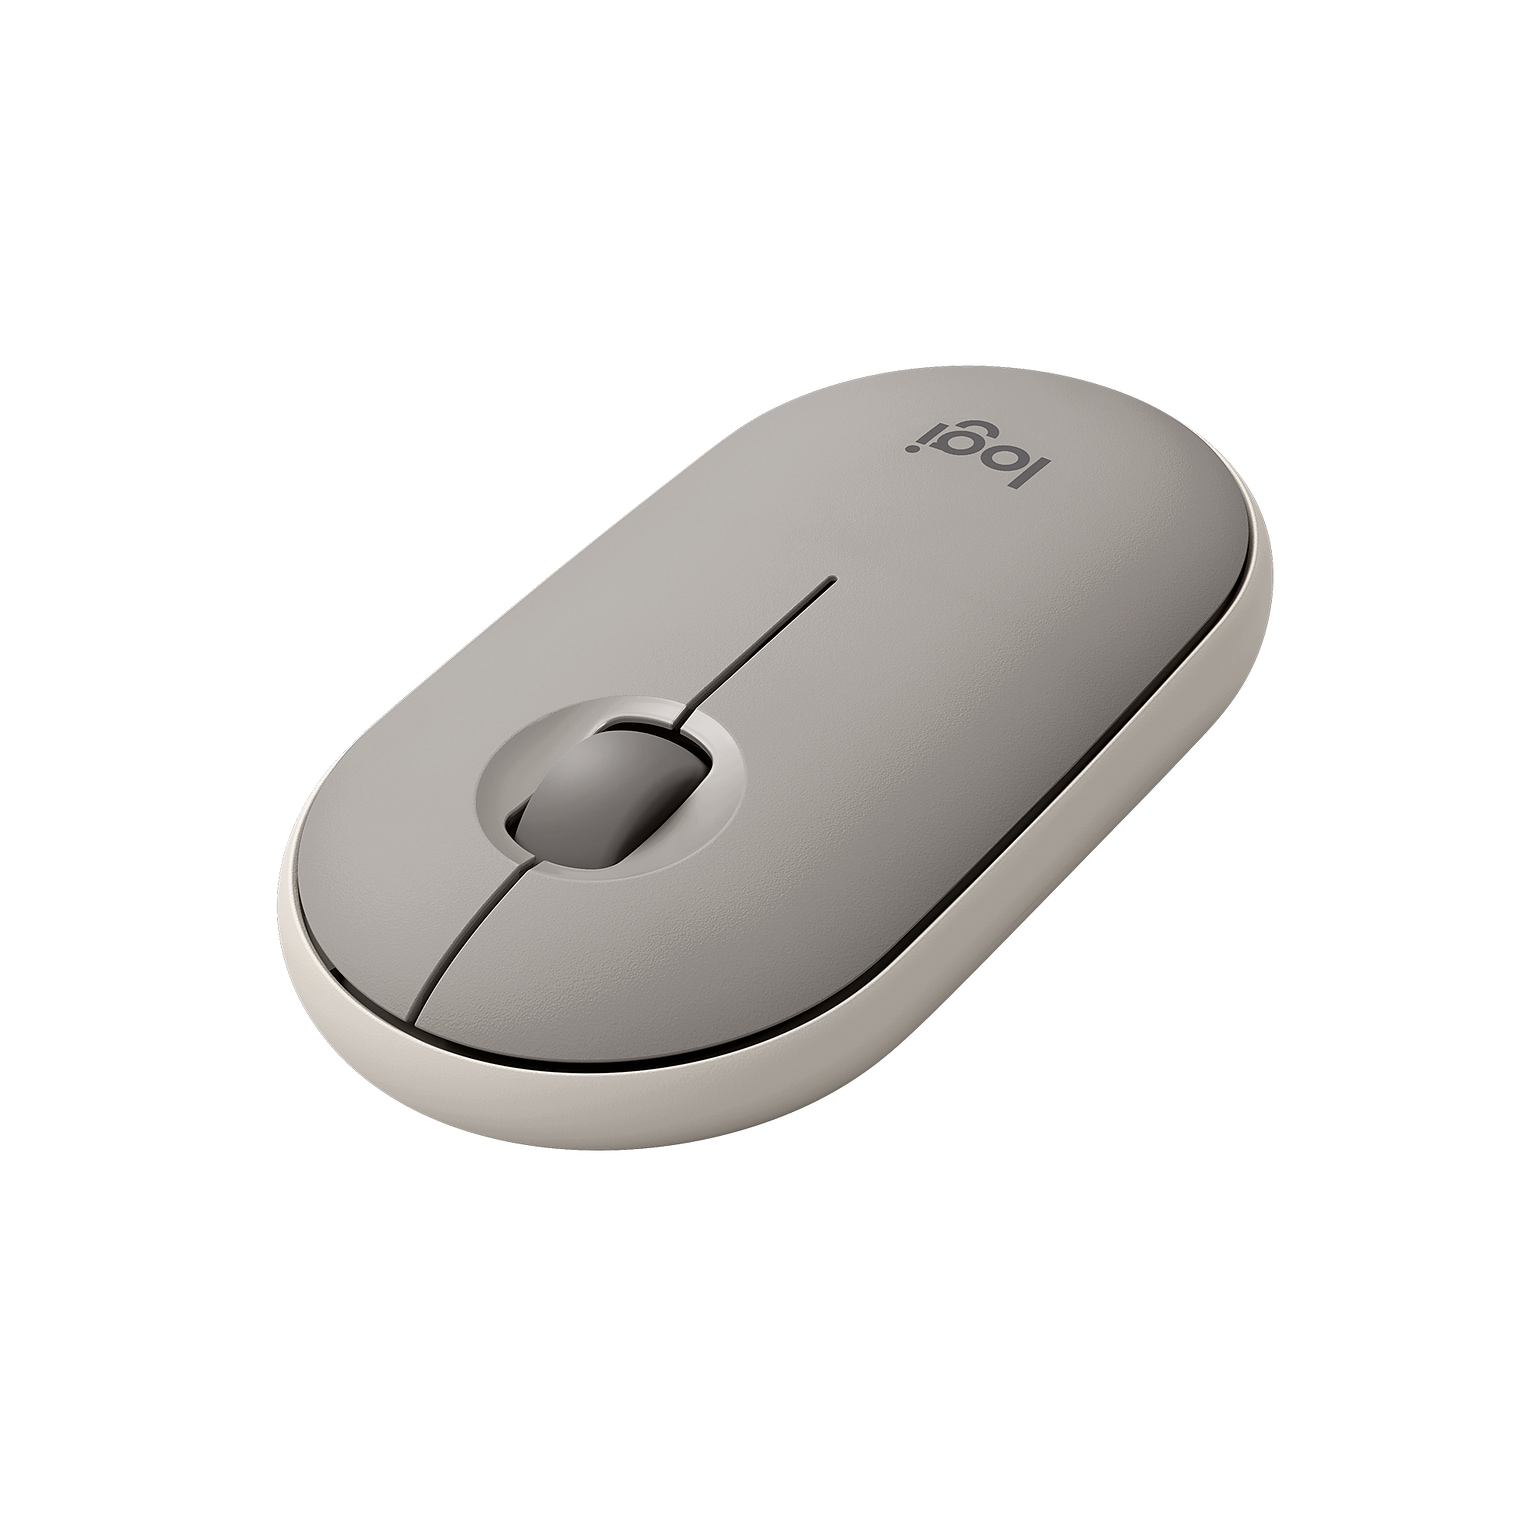 Logitech Pebble M350 Wireless Ambidextrous Optical USB Mouse, Sand (910-005769)